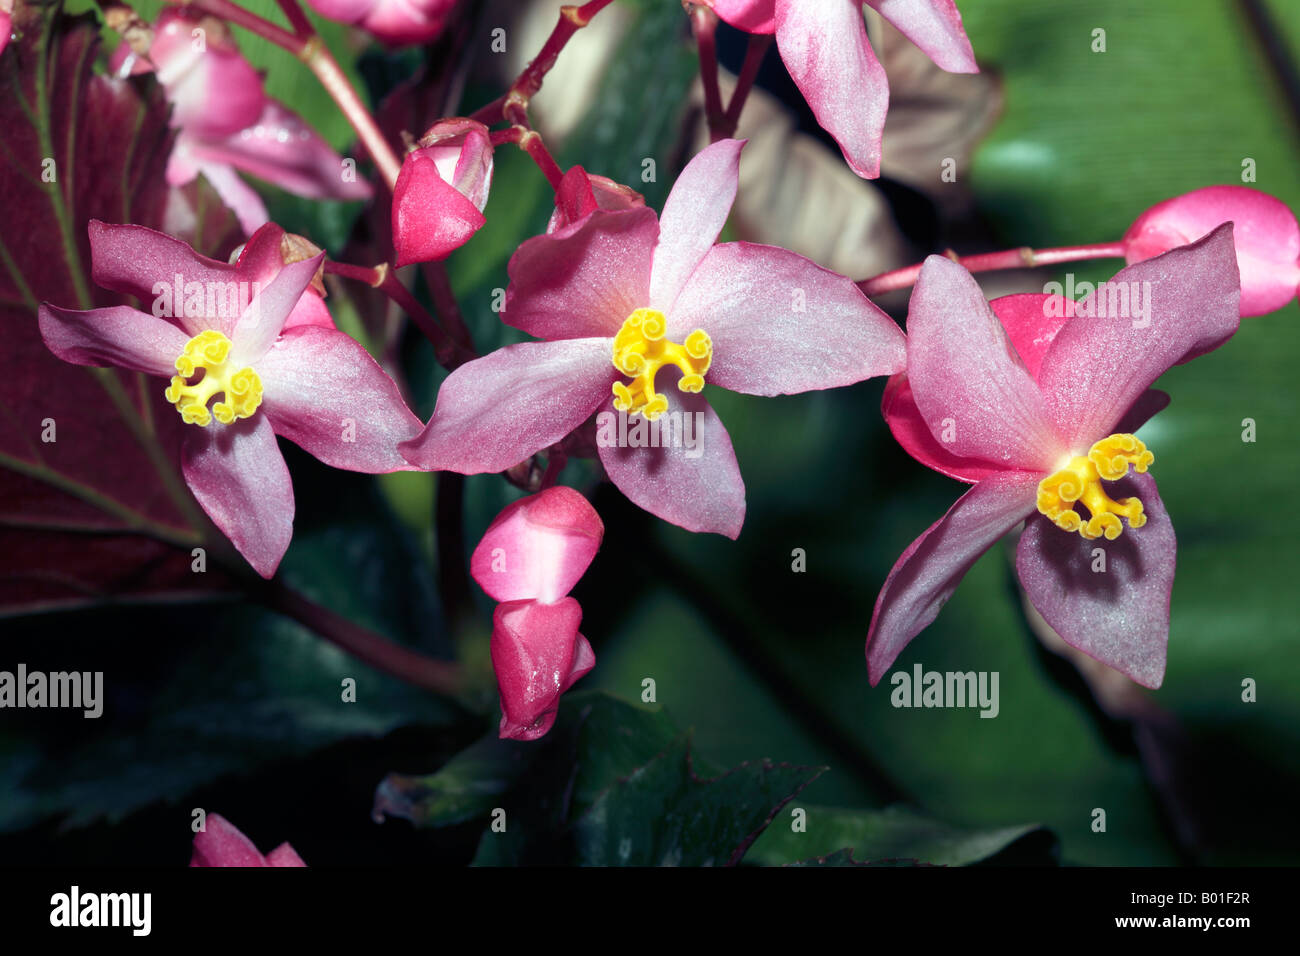 Begonia flower-Family Begoniaceae Stock Photo